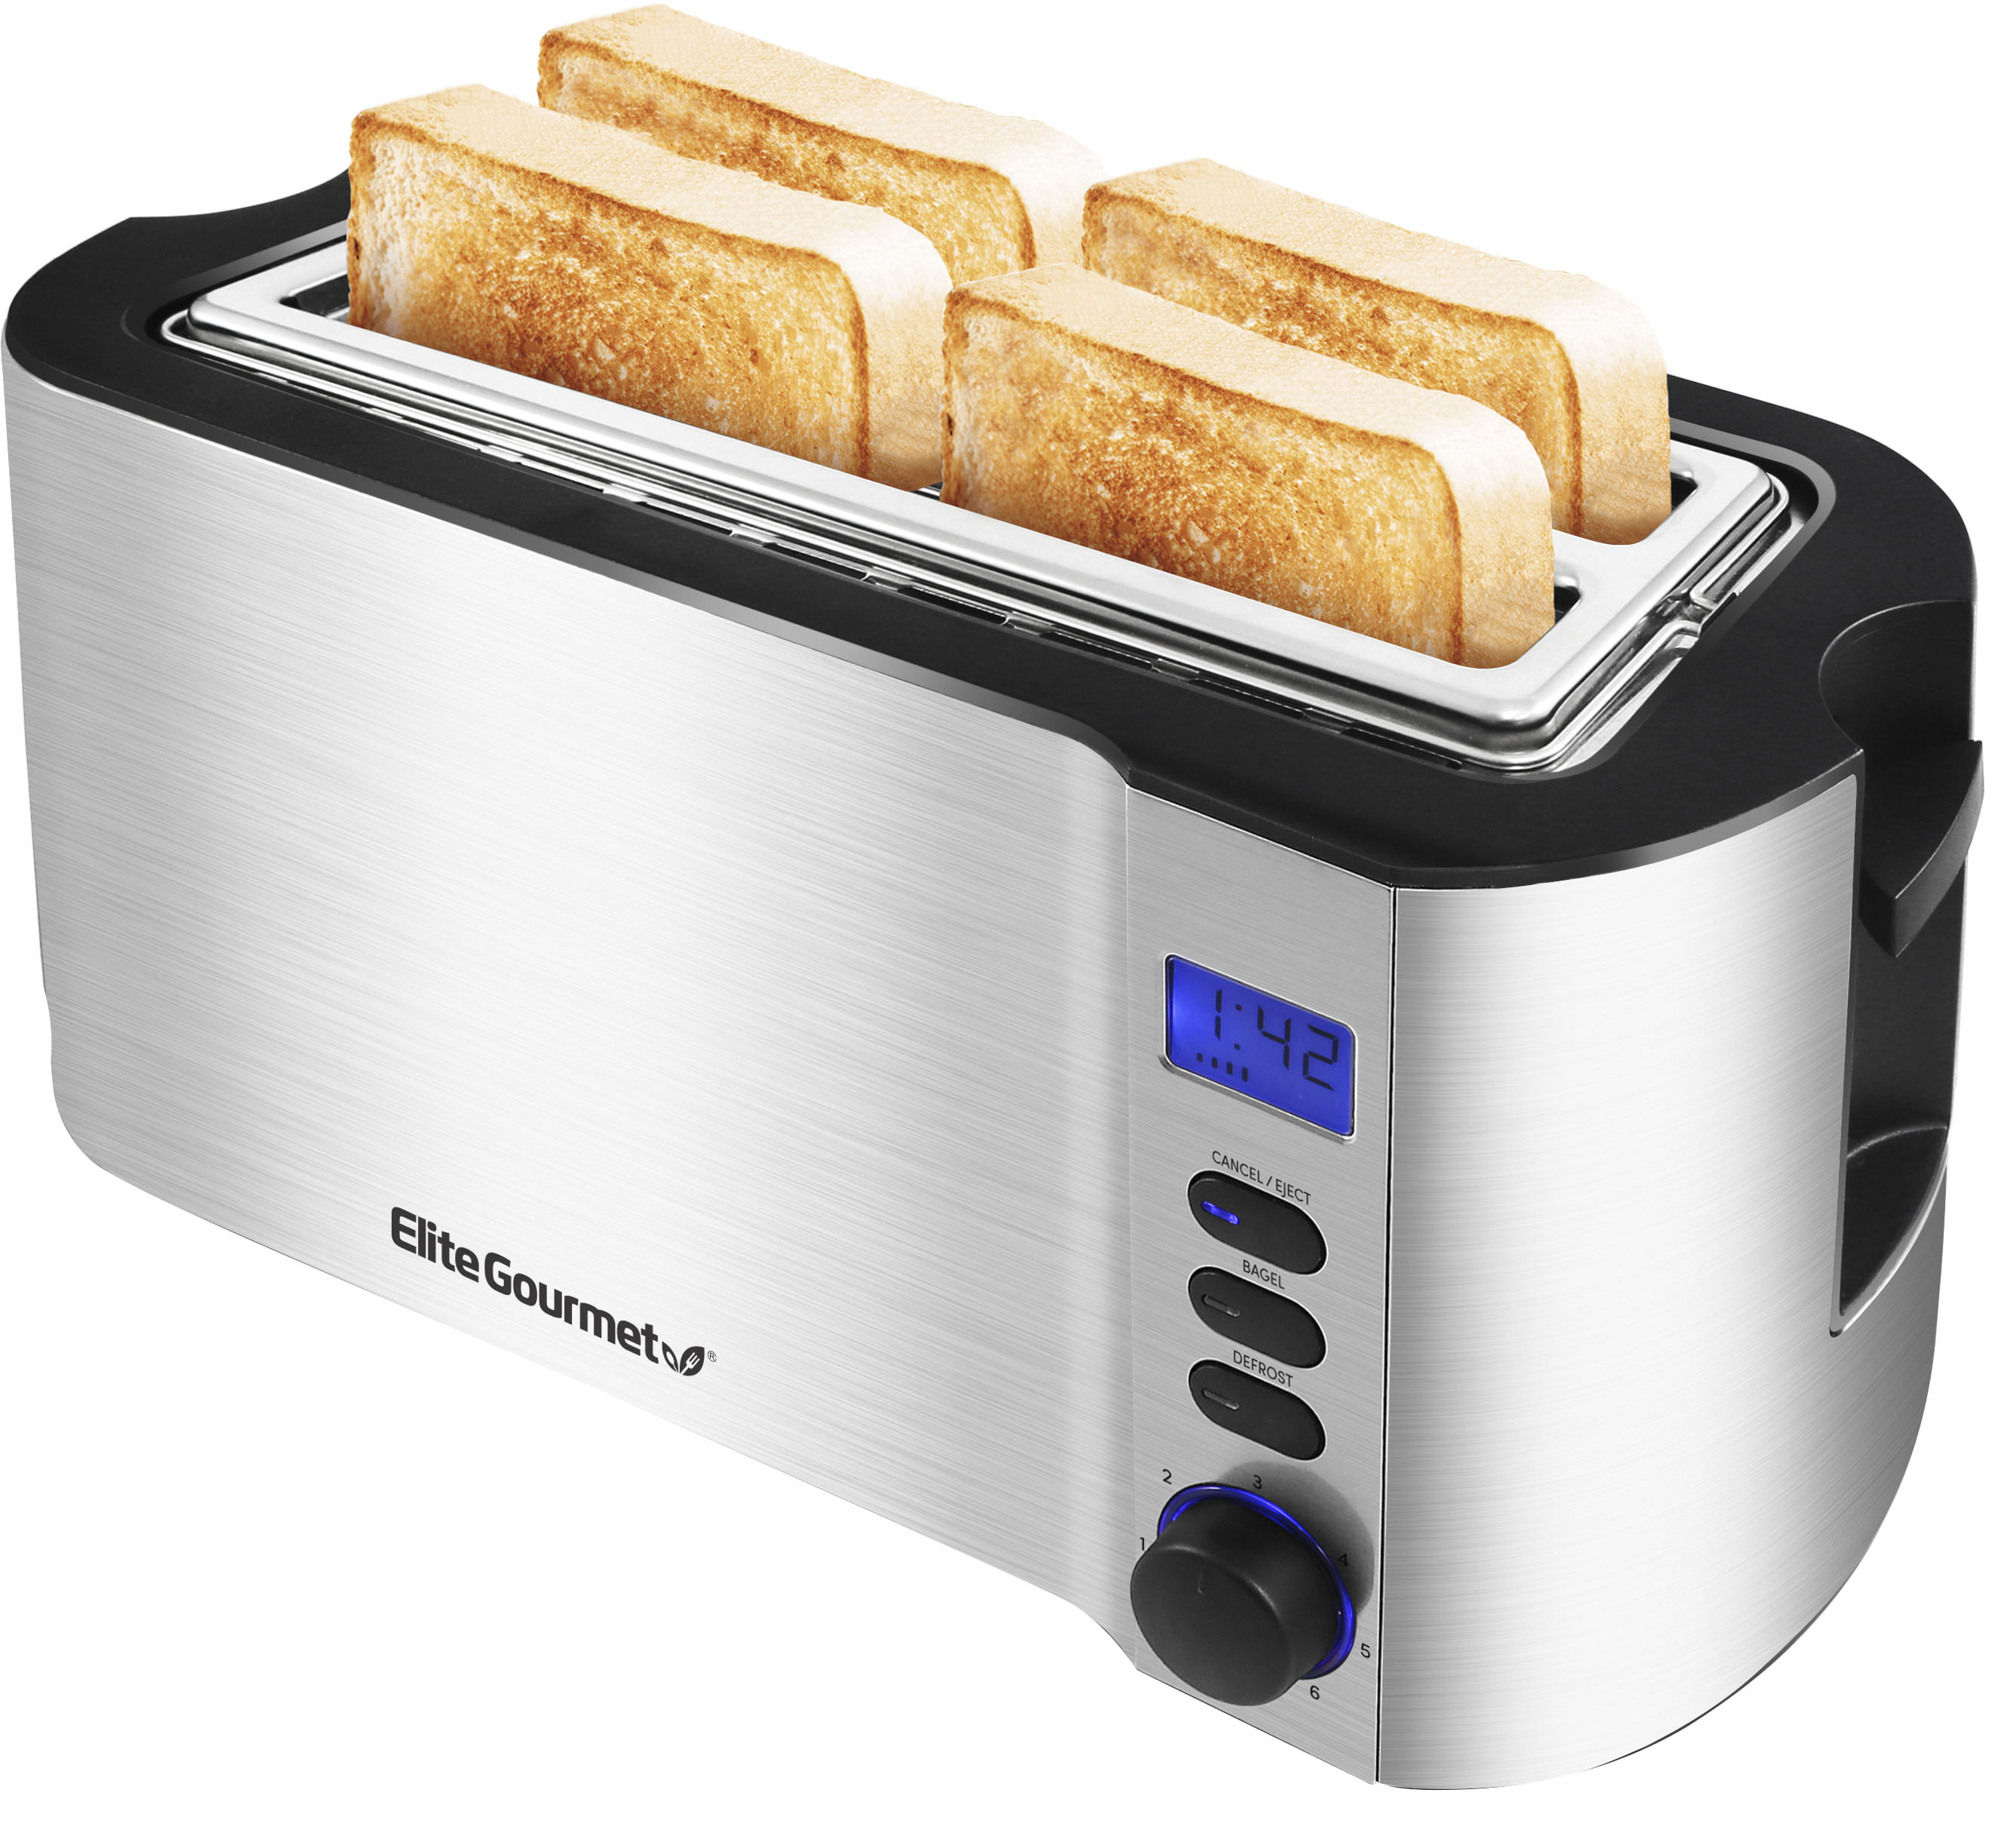 Thin Toaster - Best Buy